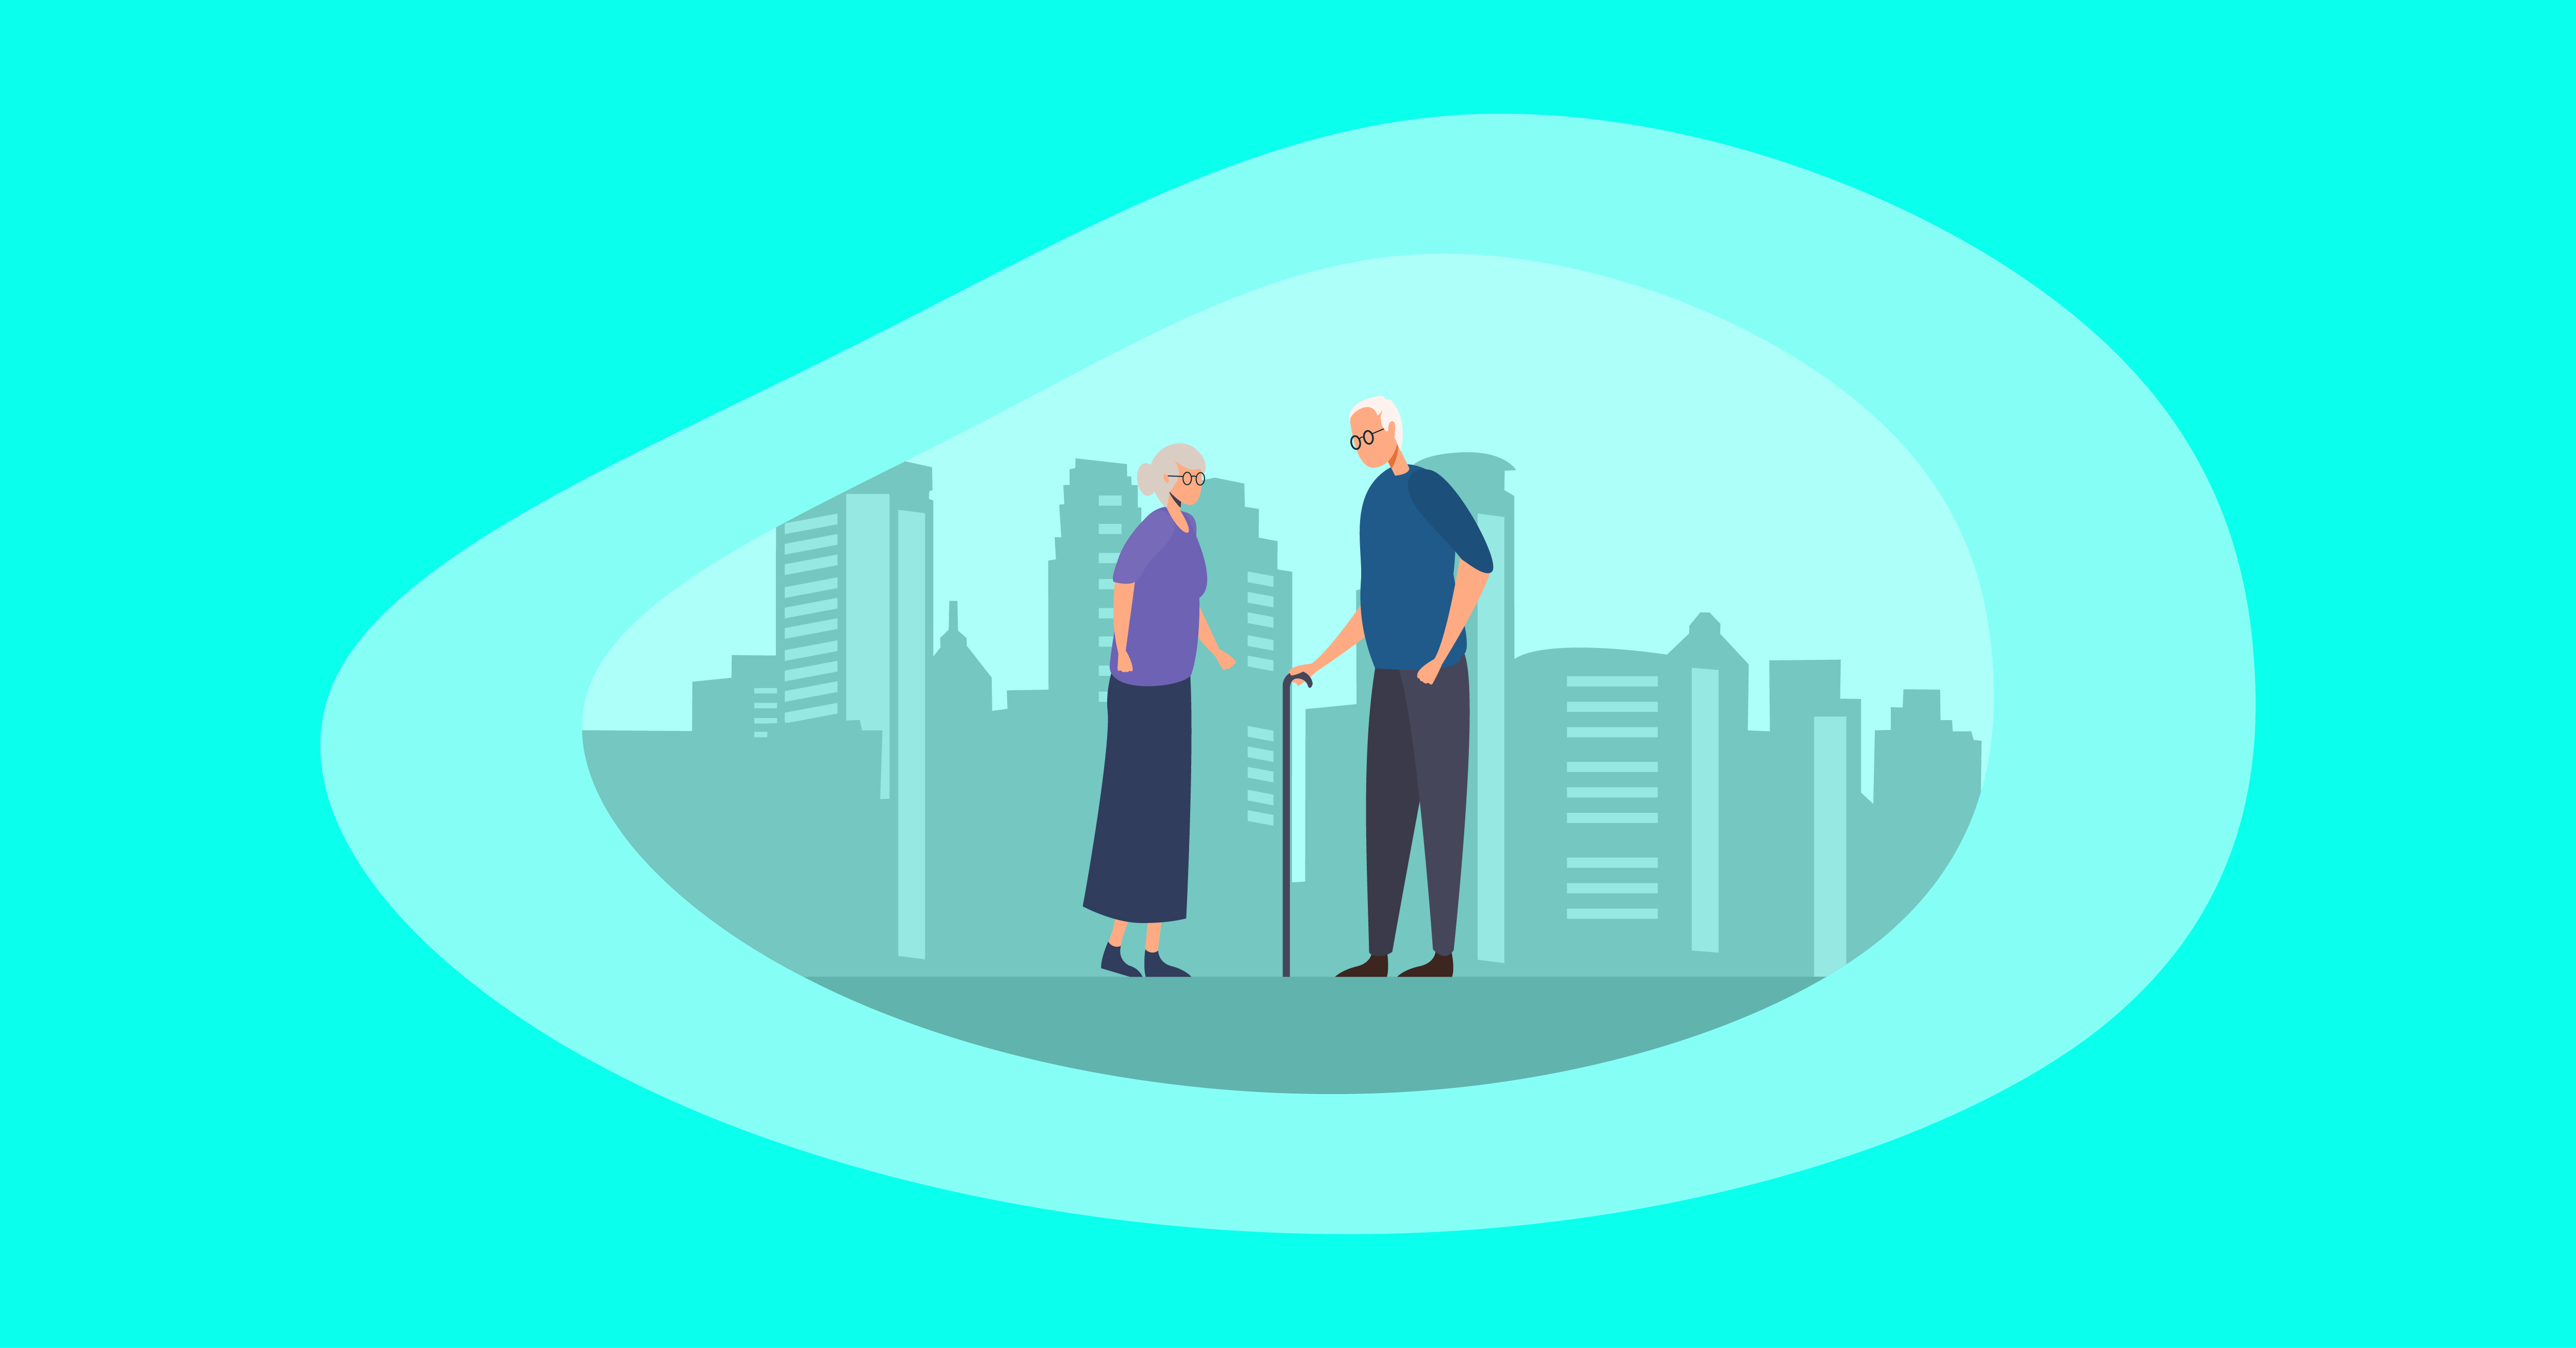 Illustration of two senior citizens